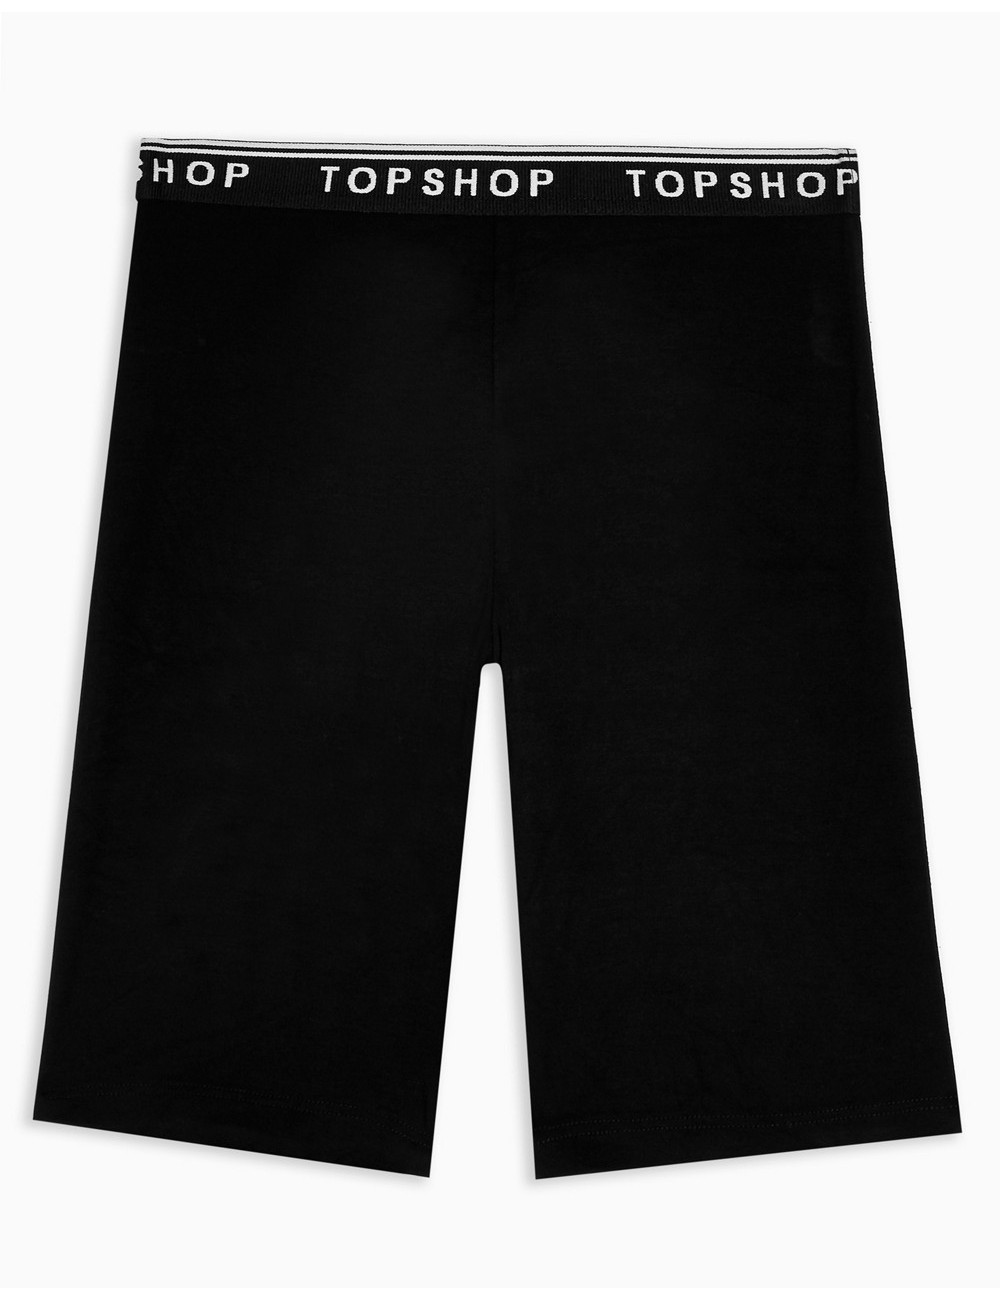 Topshop legging shorts in...